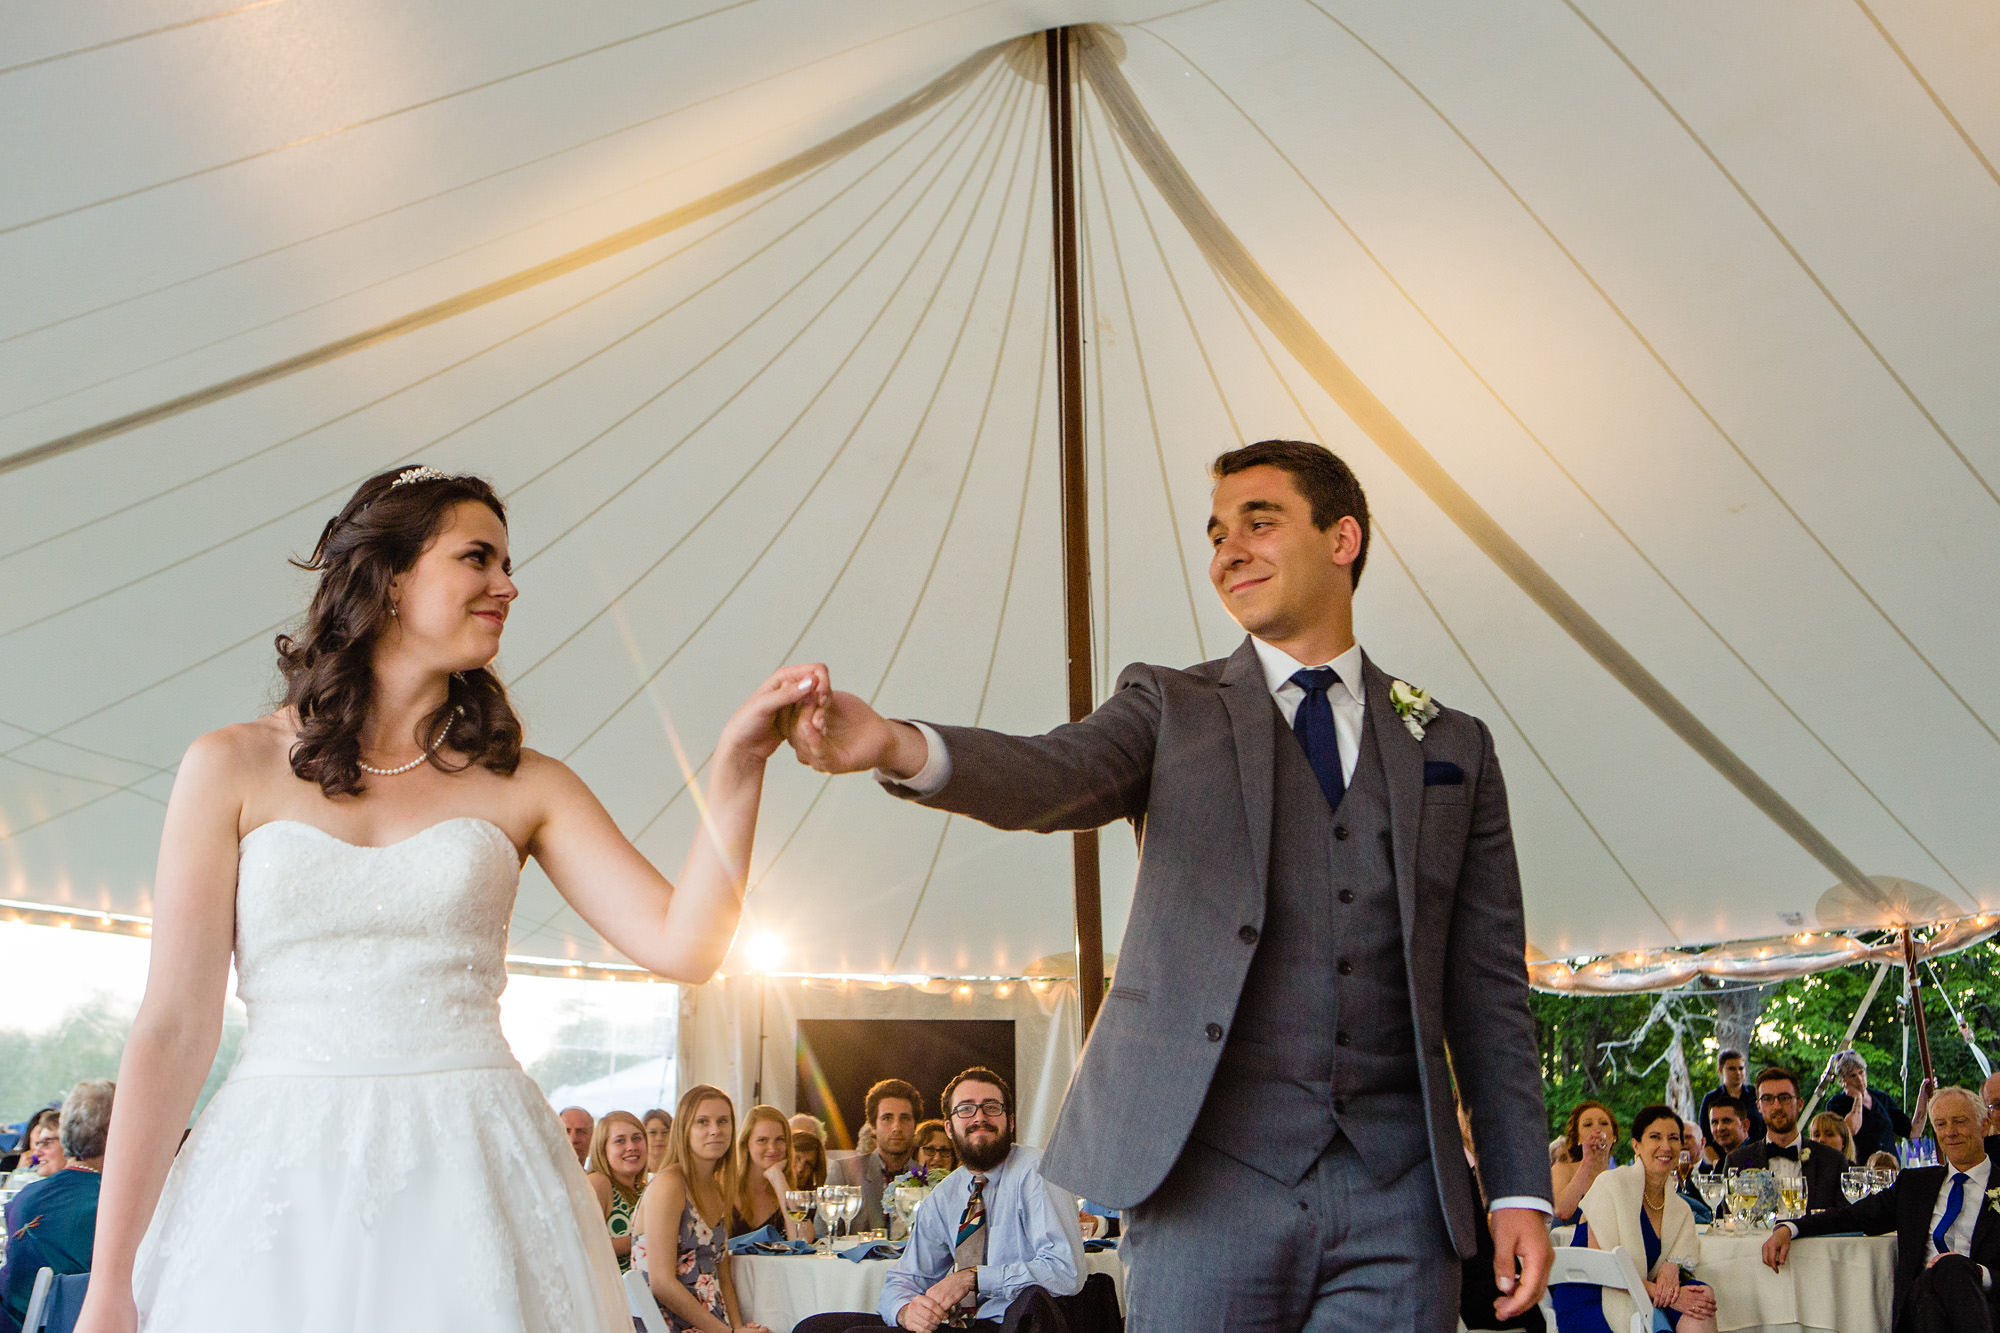 A bride and groom enjoy a first dance at their Maine island wedding.